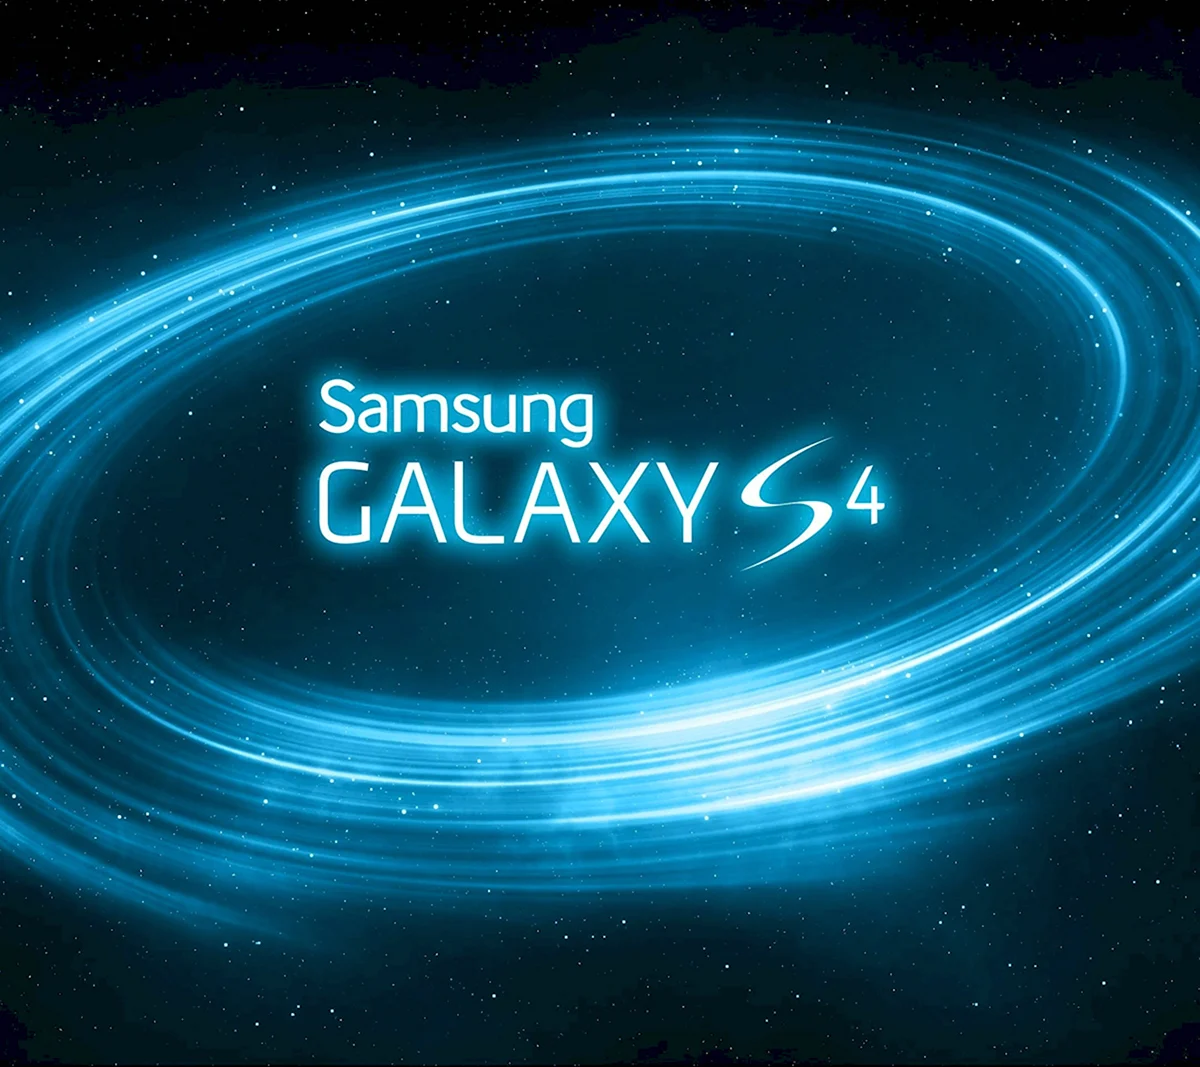 Samsung Galaxy s4 logo